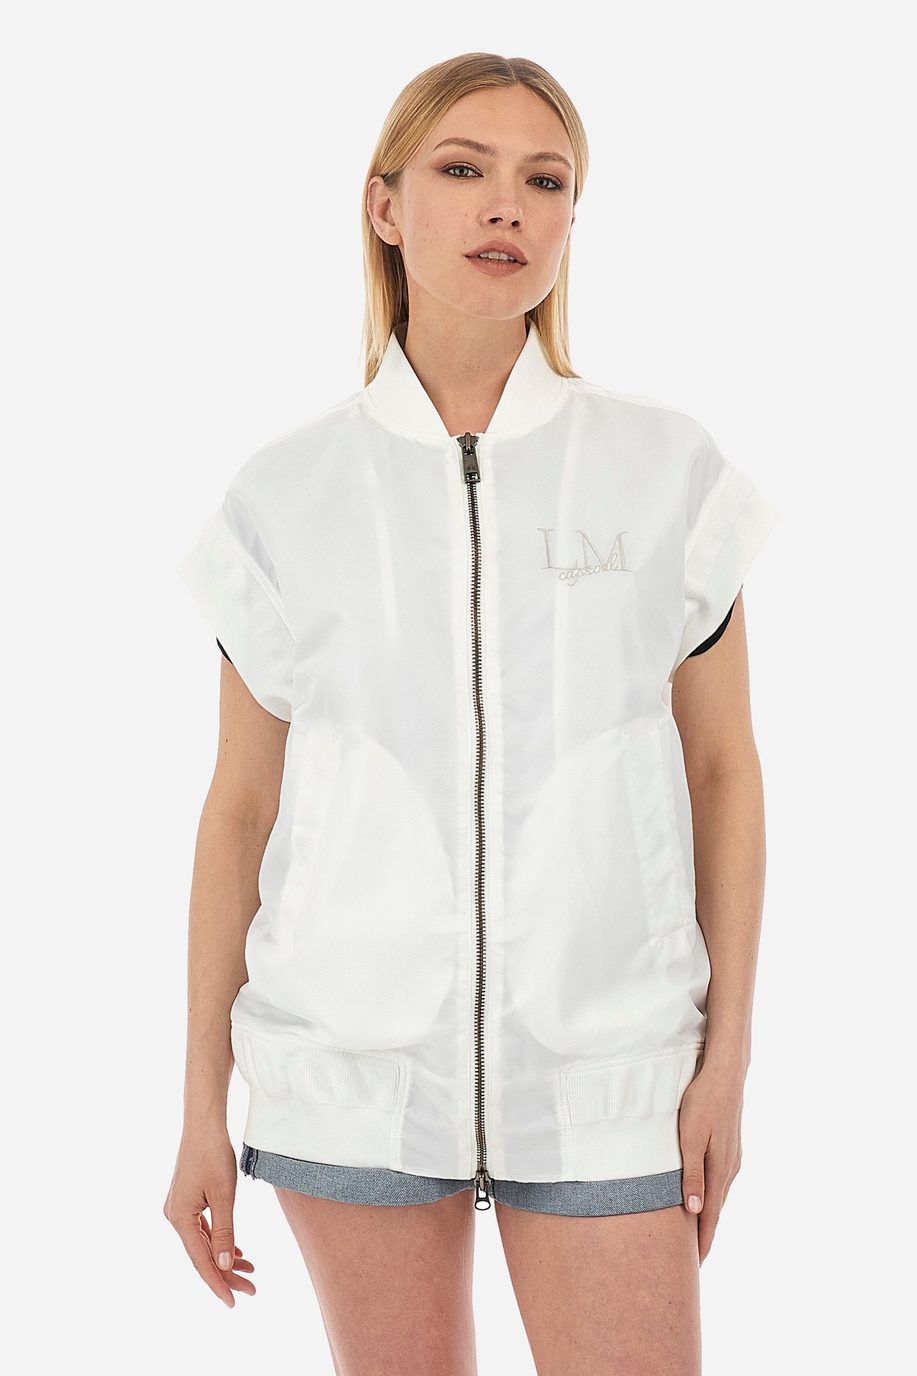 Damen-Jacke mit normaler Passform- Vanja - Neuankömmlinge Frauen | La Martina - Official Online Shop